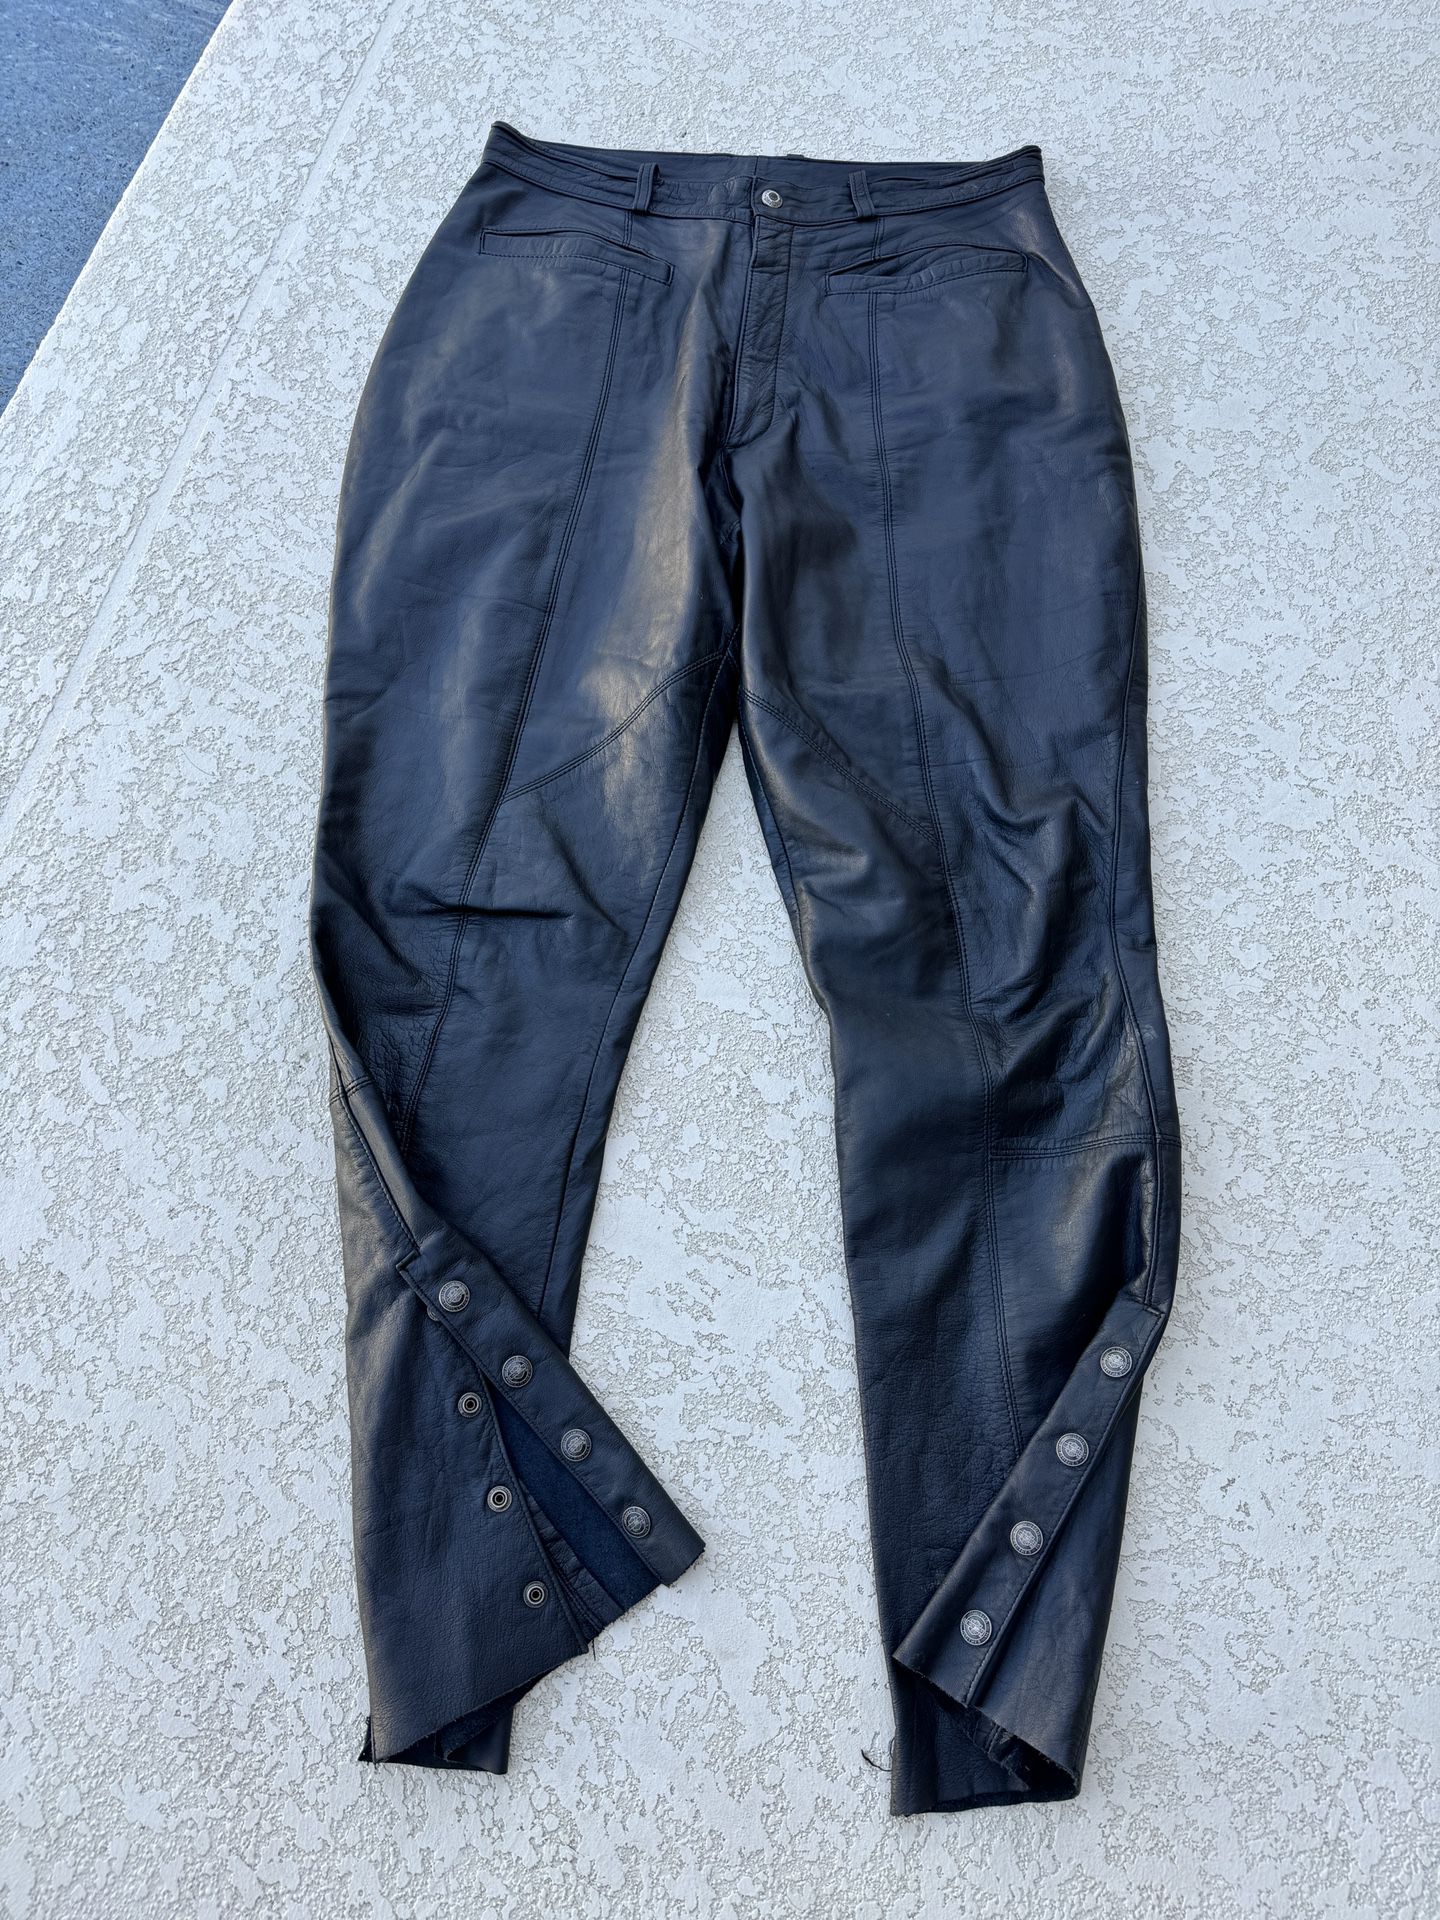 Harley Davidson, motorcycle leather riding pants.